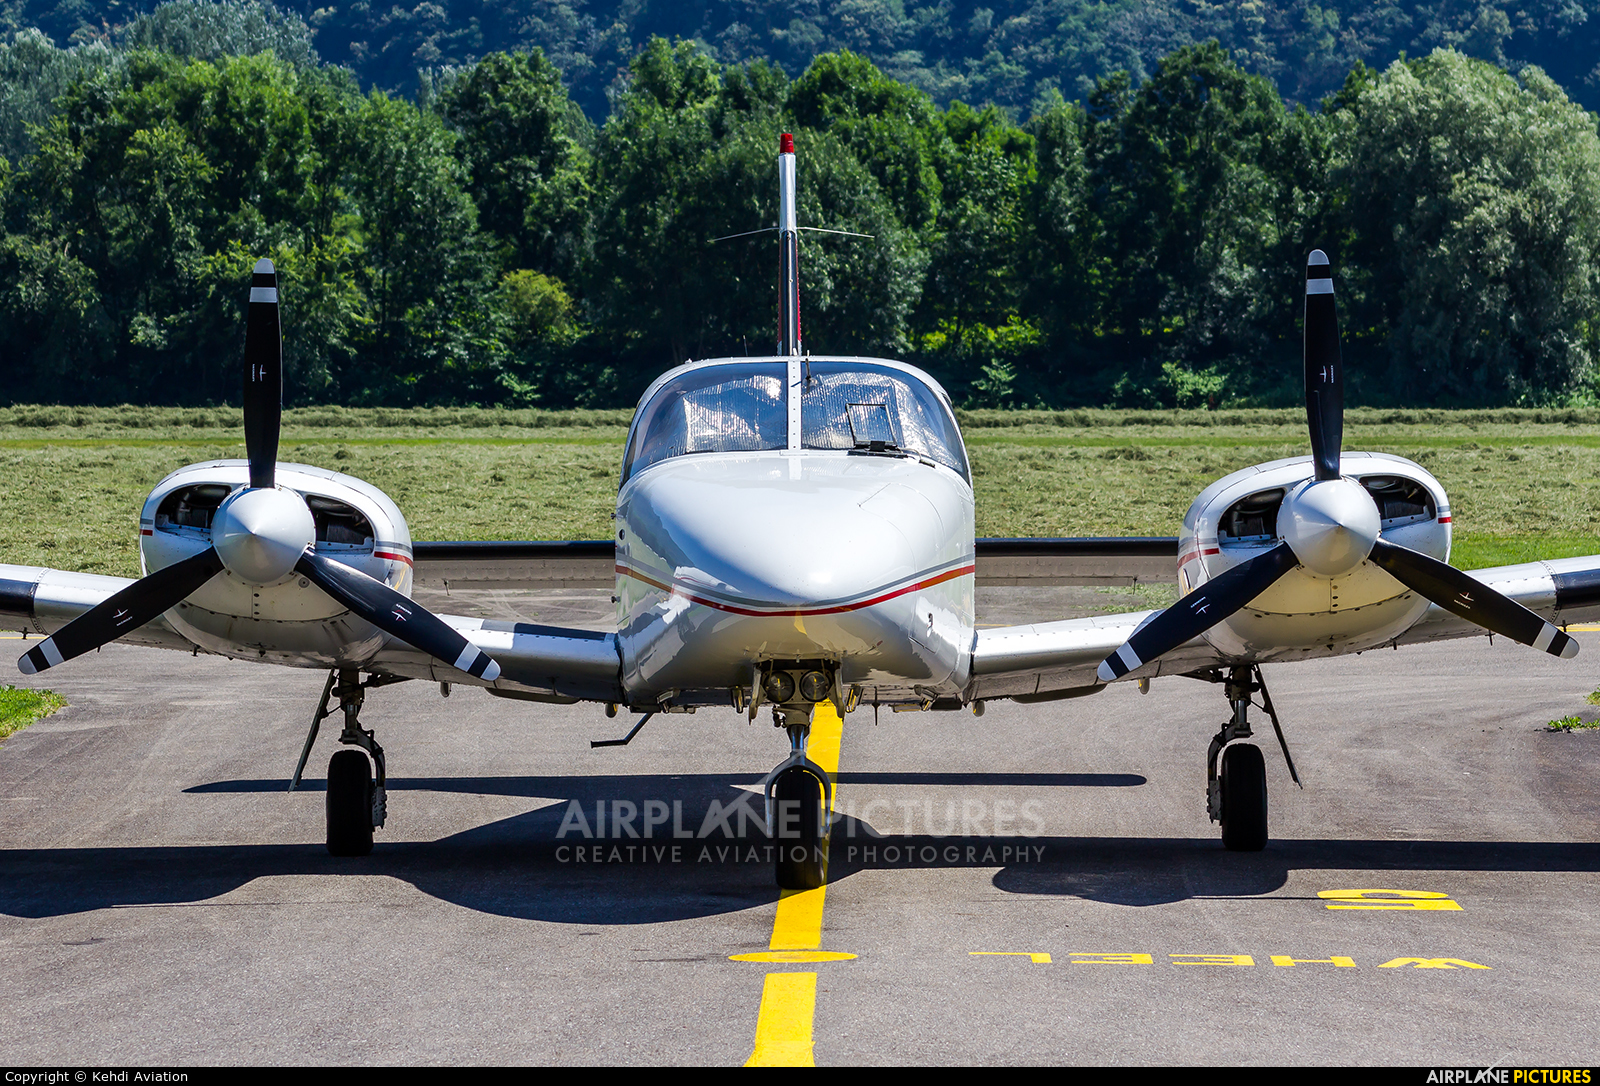 Private HB-LLM aircraft at Locarno